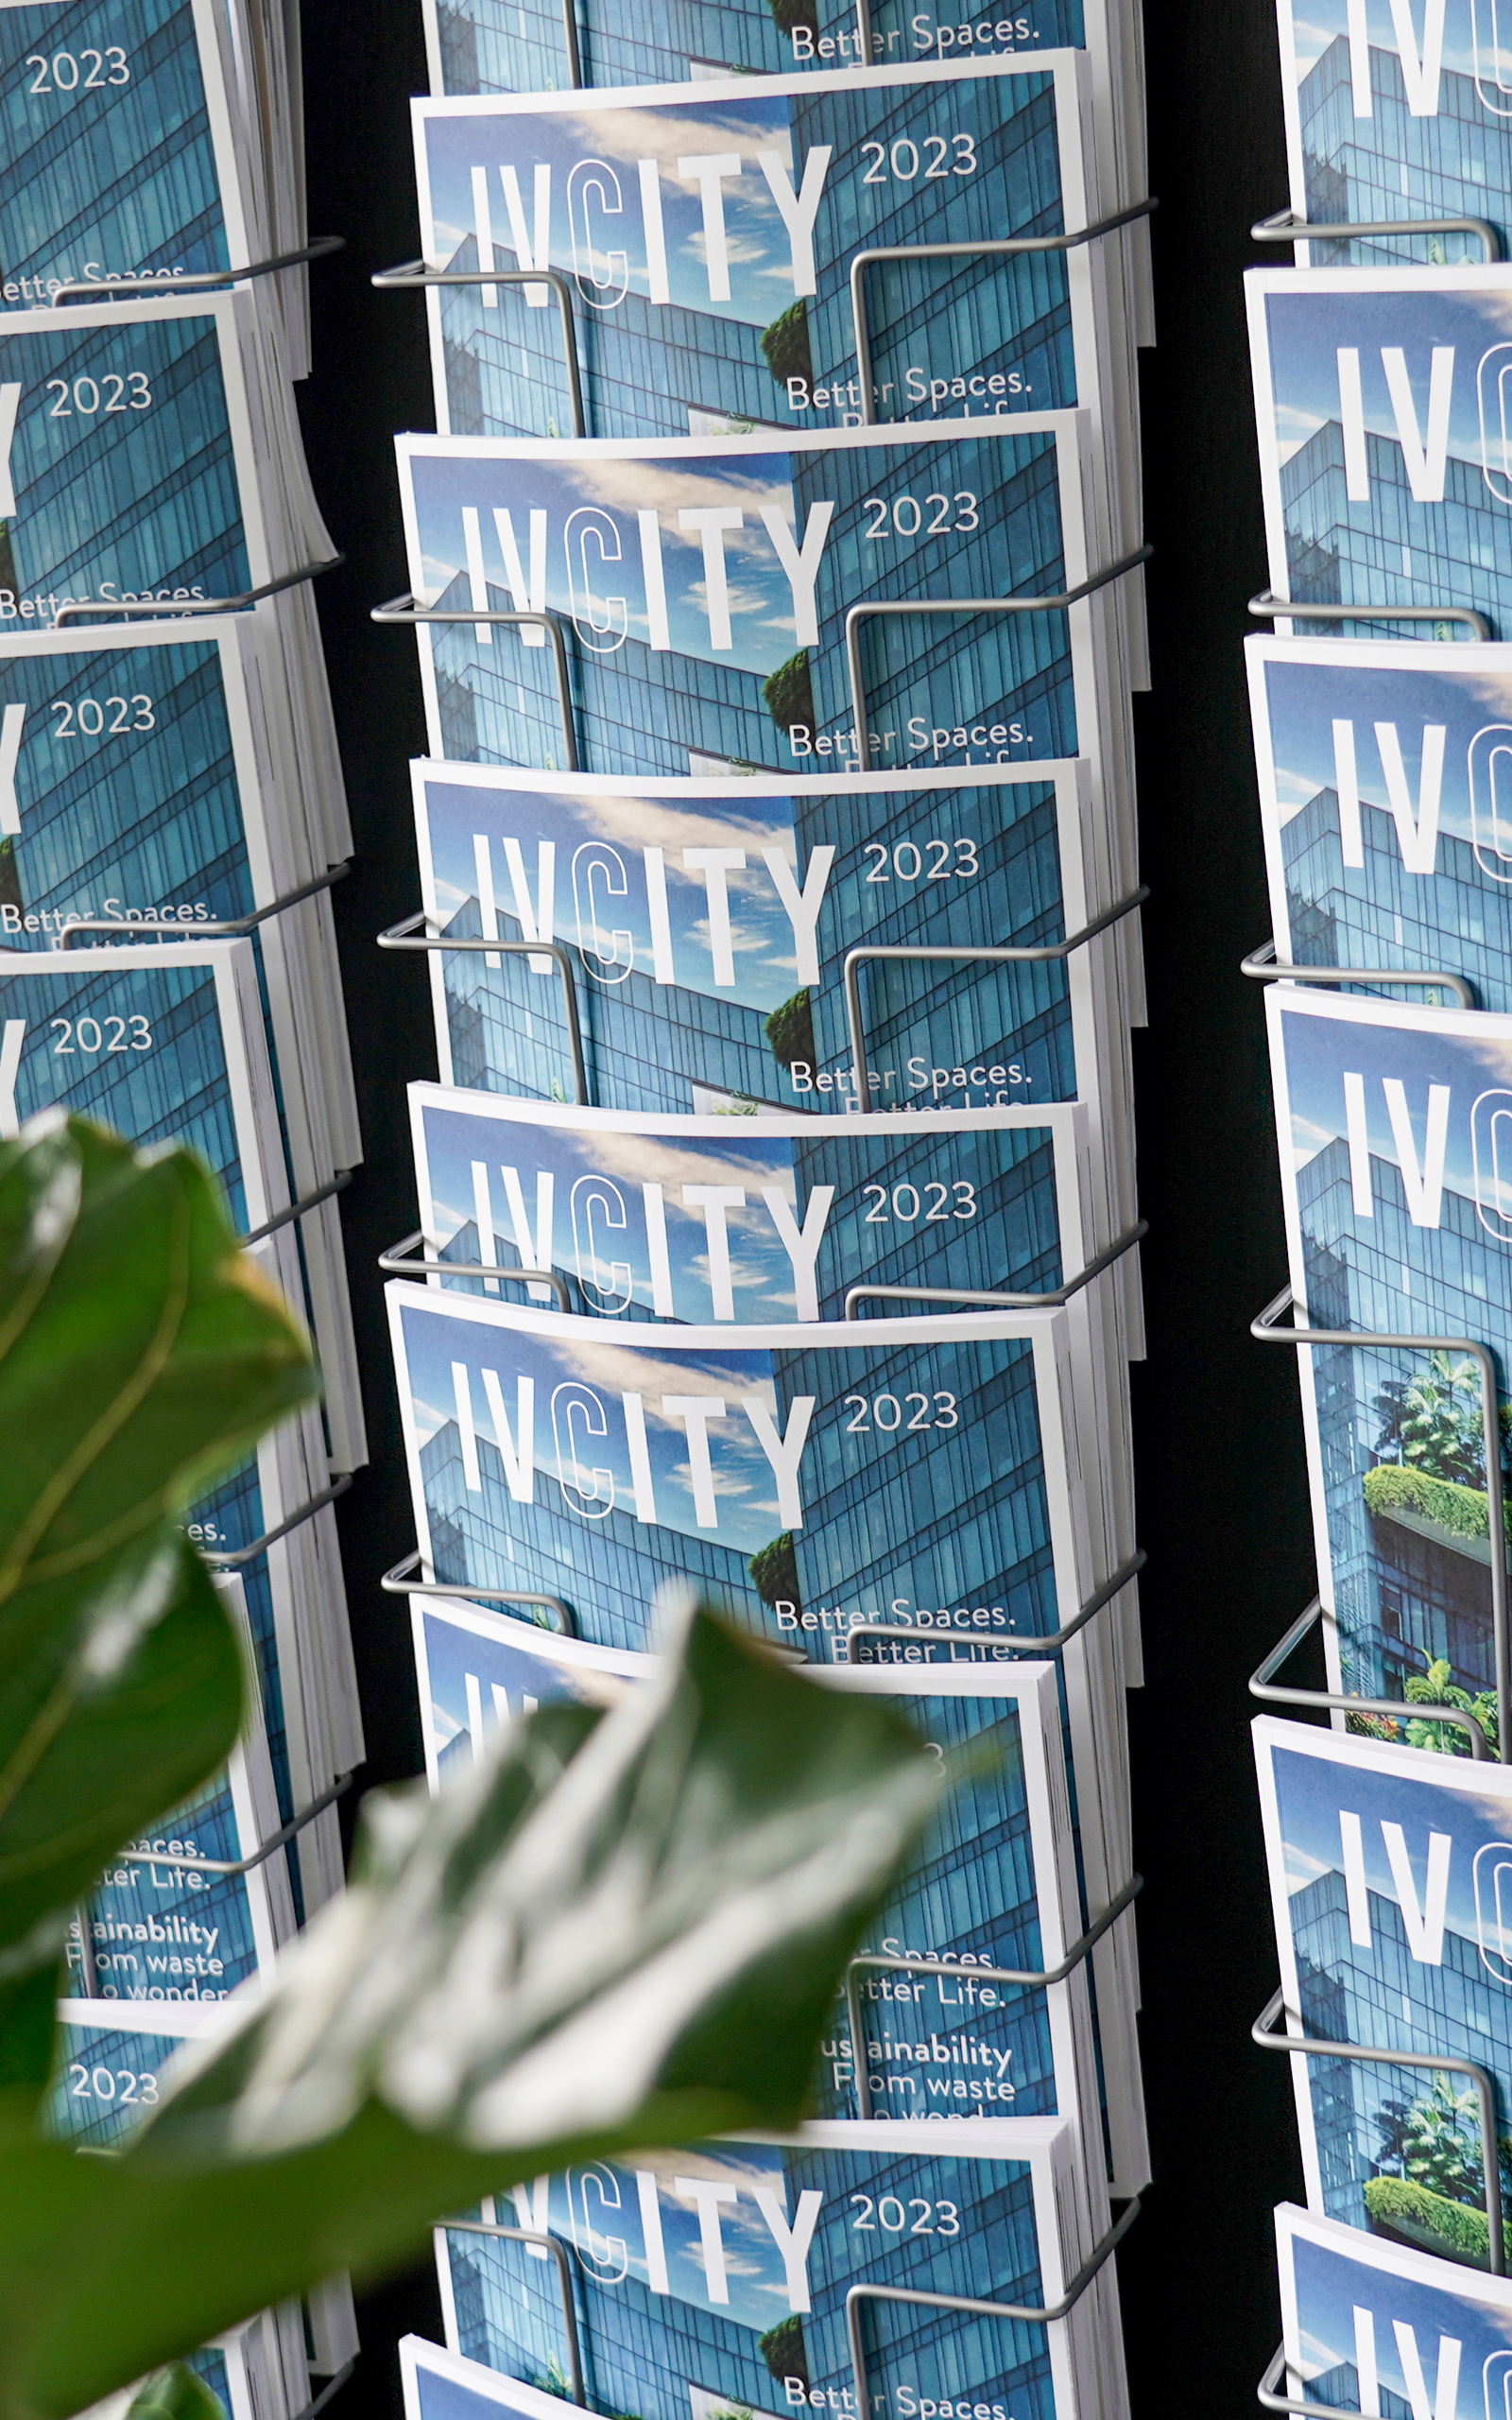 Magazines IVCity in display